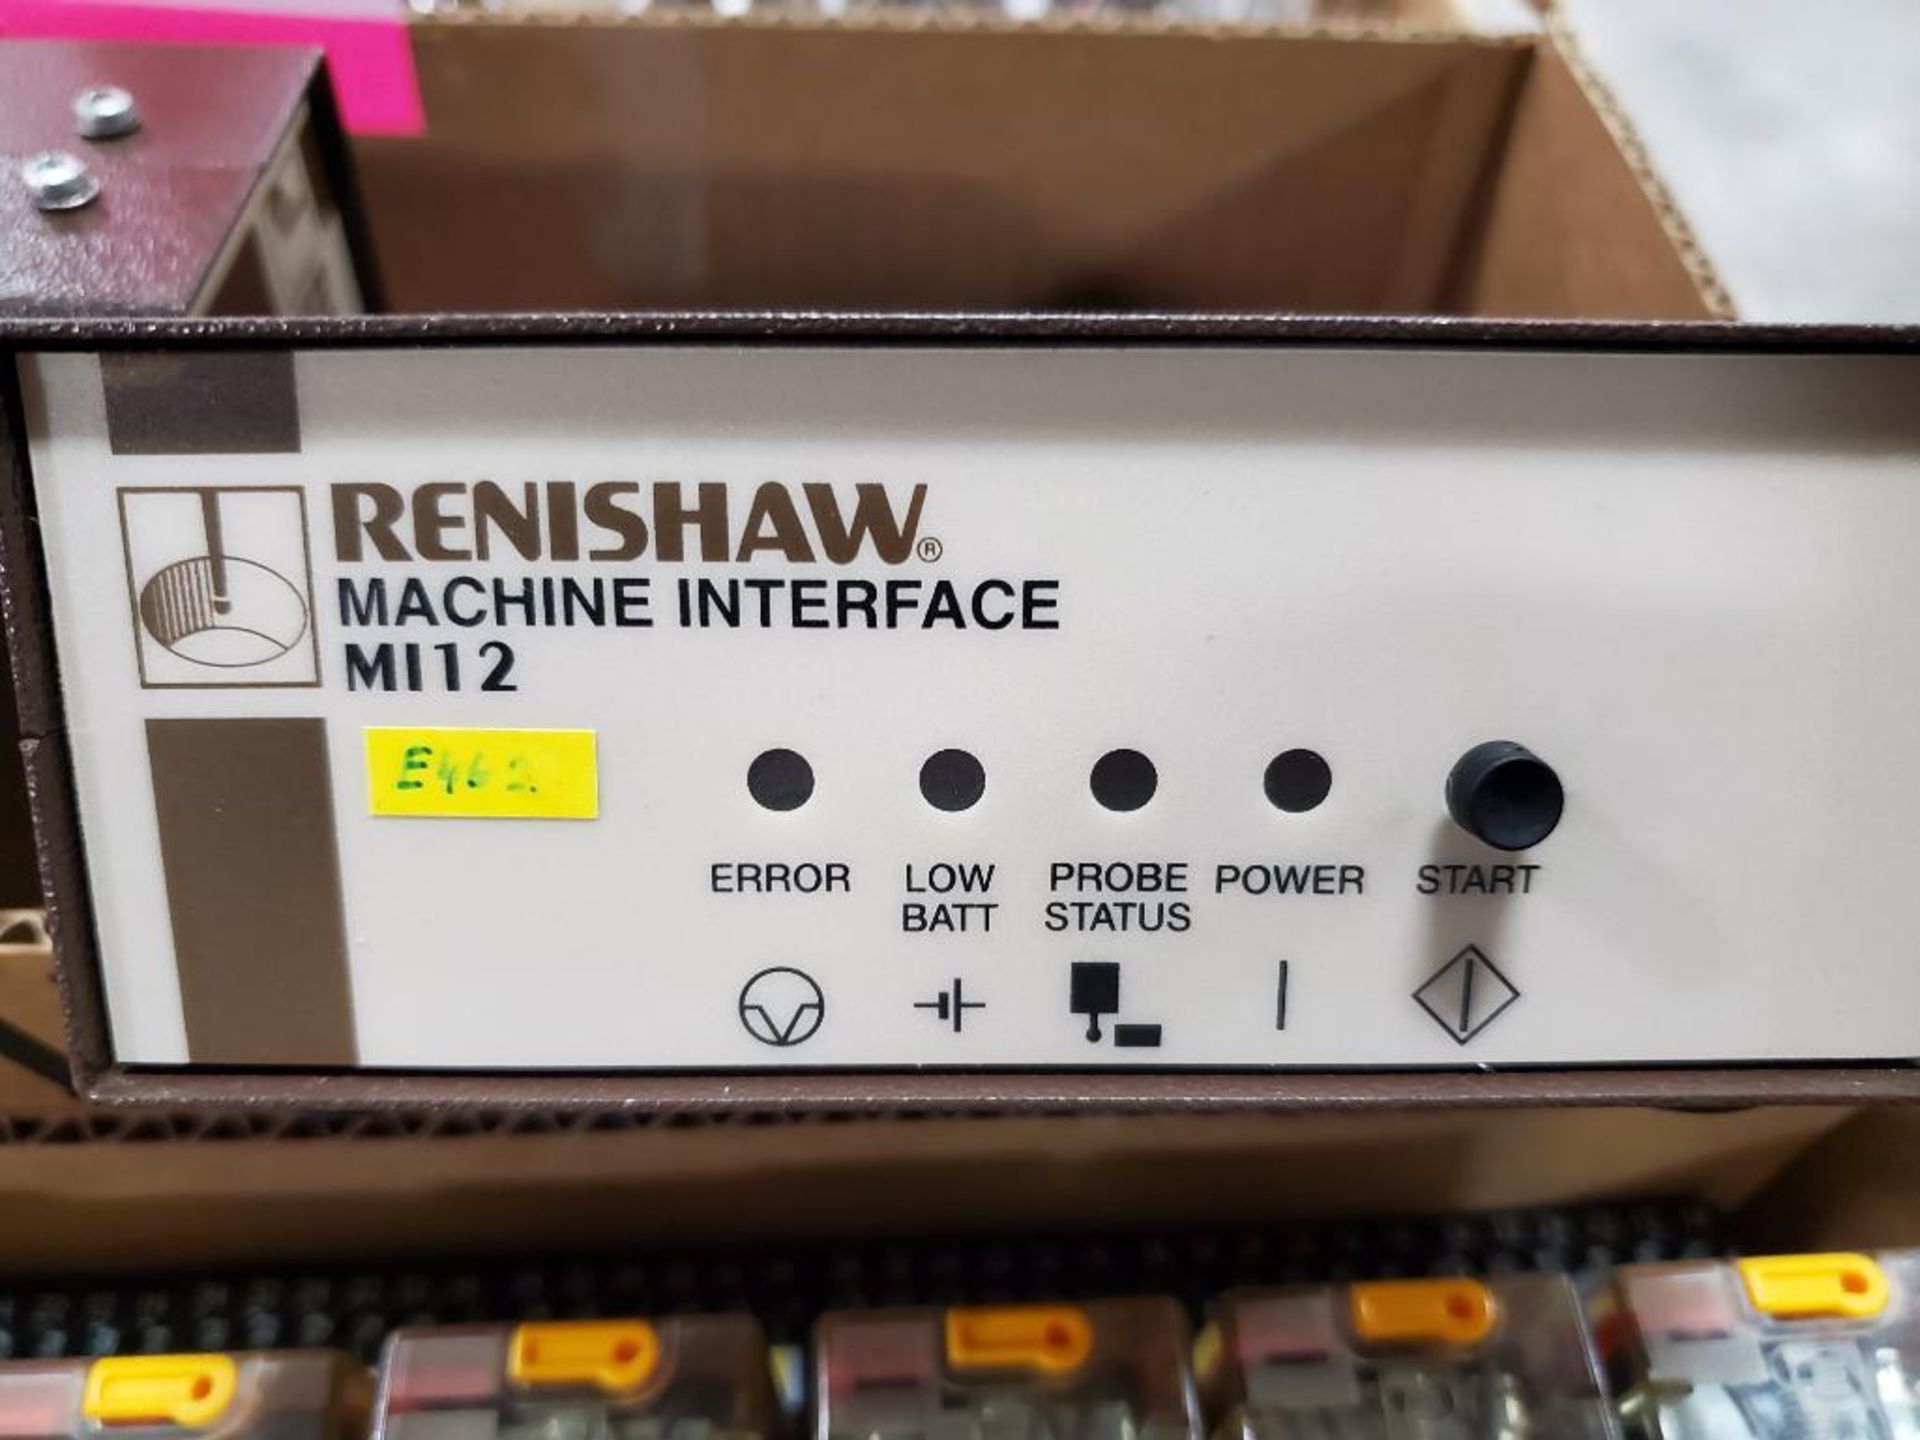 Qty 2 - Renishaw machine interface. Part number MI12. - Image 2 of 4